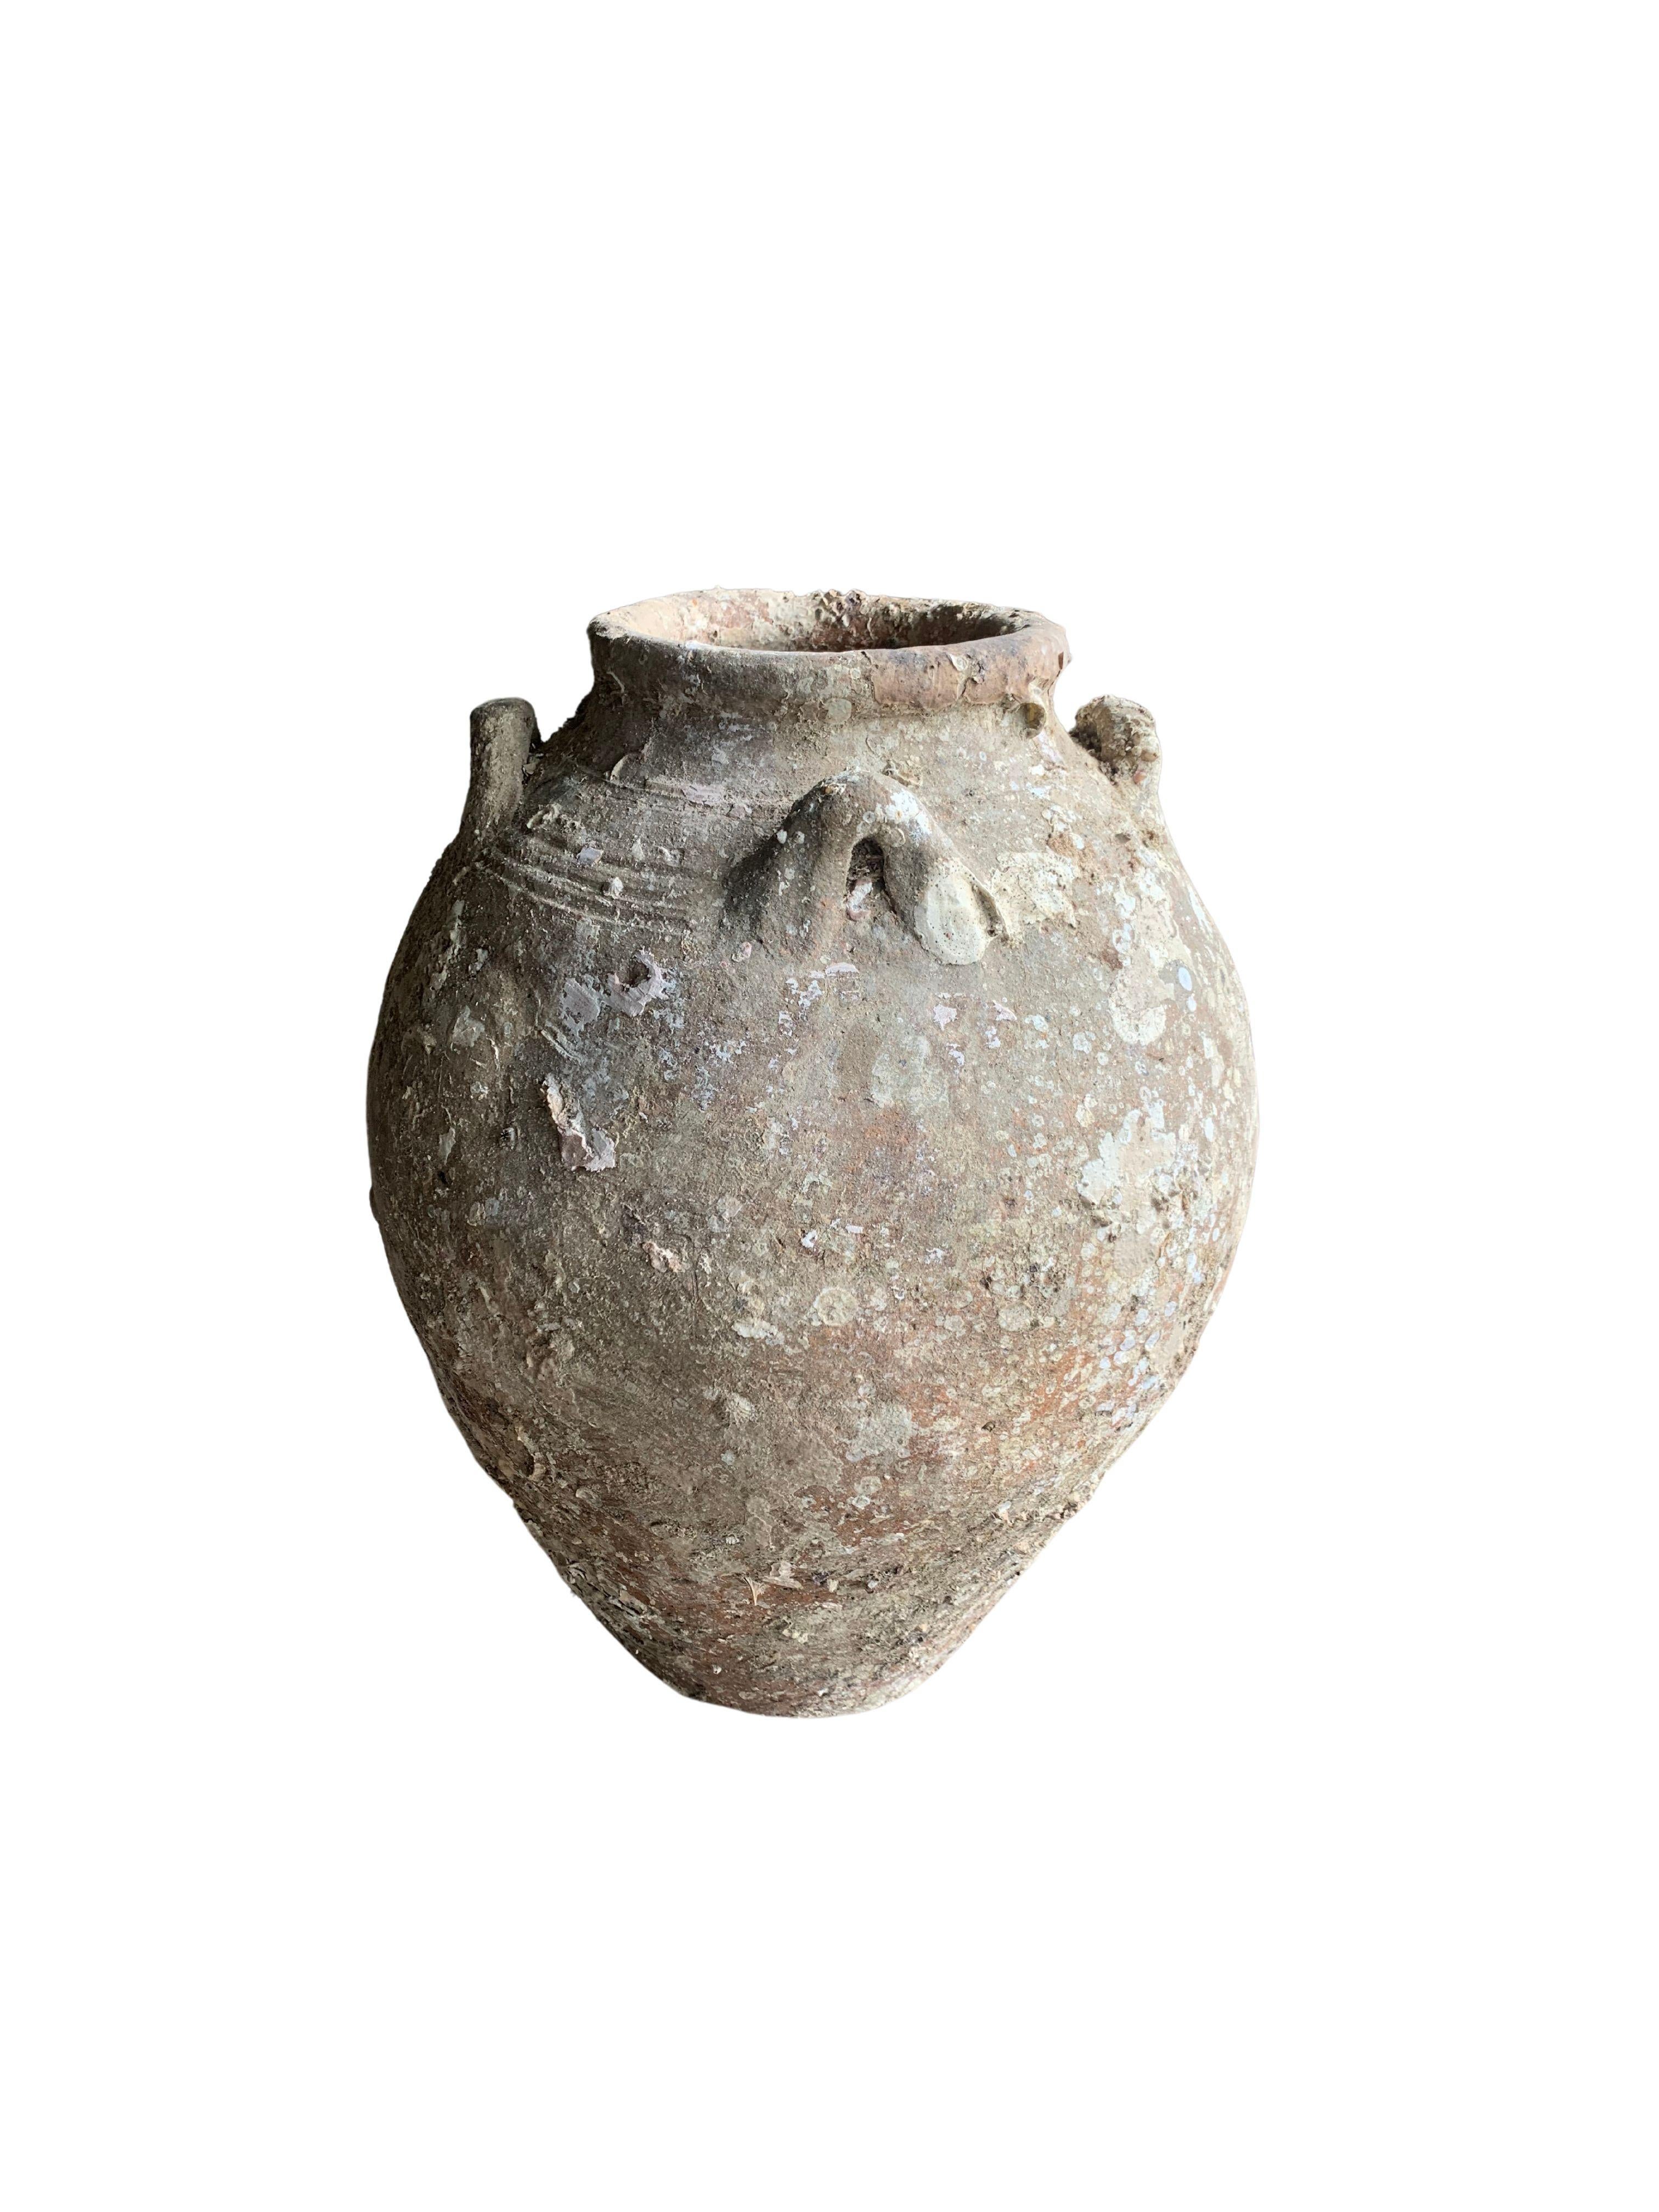 Other Singburi Shipwreck Jar from the Kingdom of Sukhothai, Thailand, 17th Century